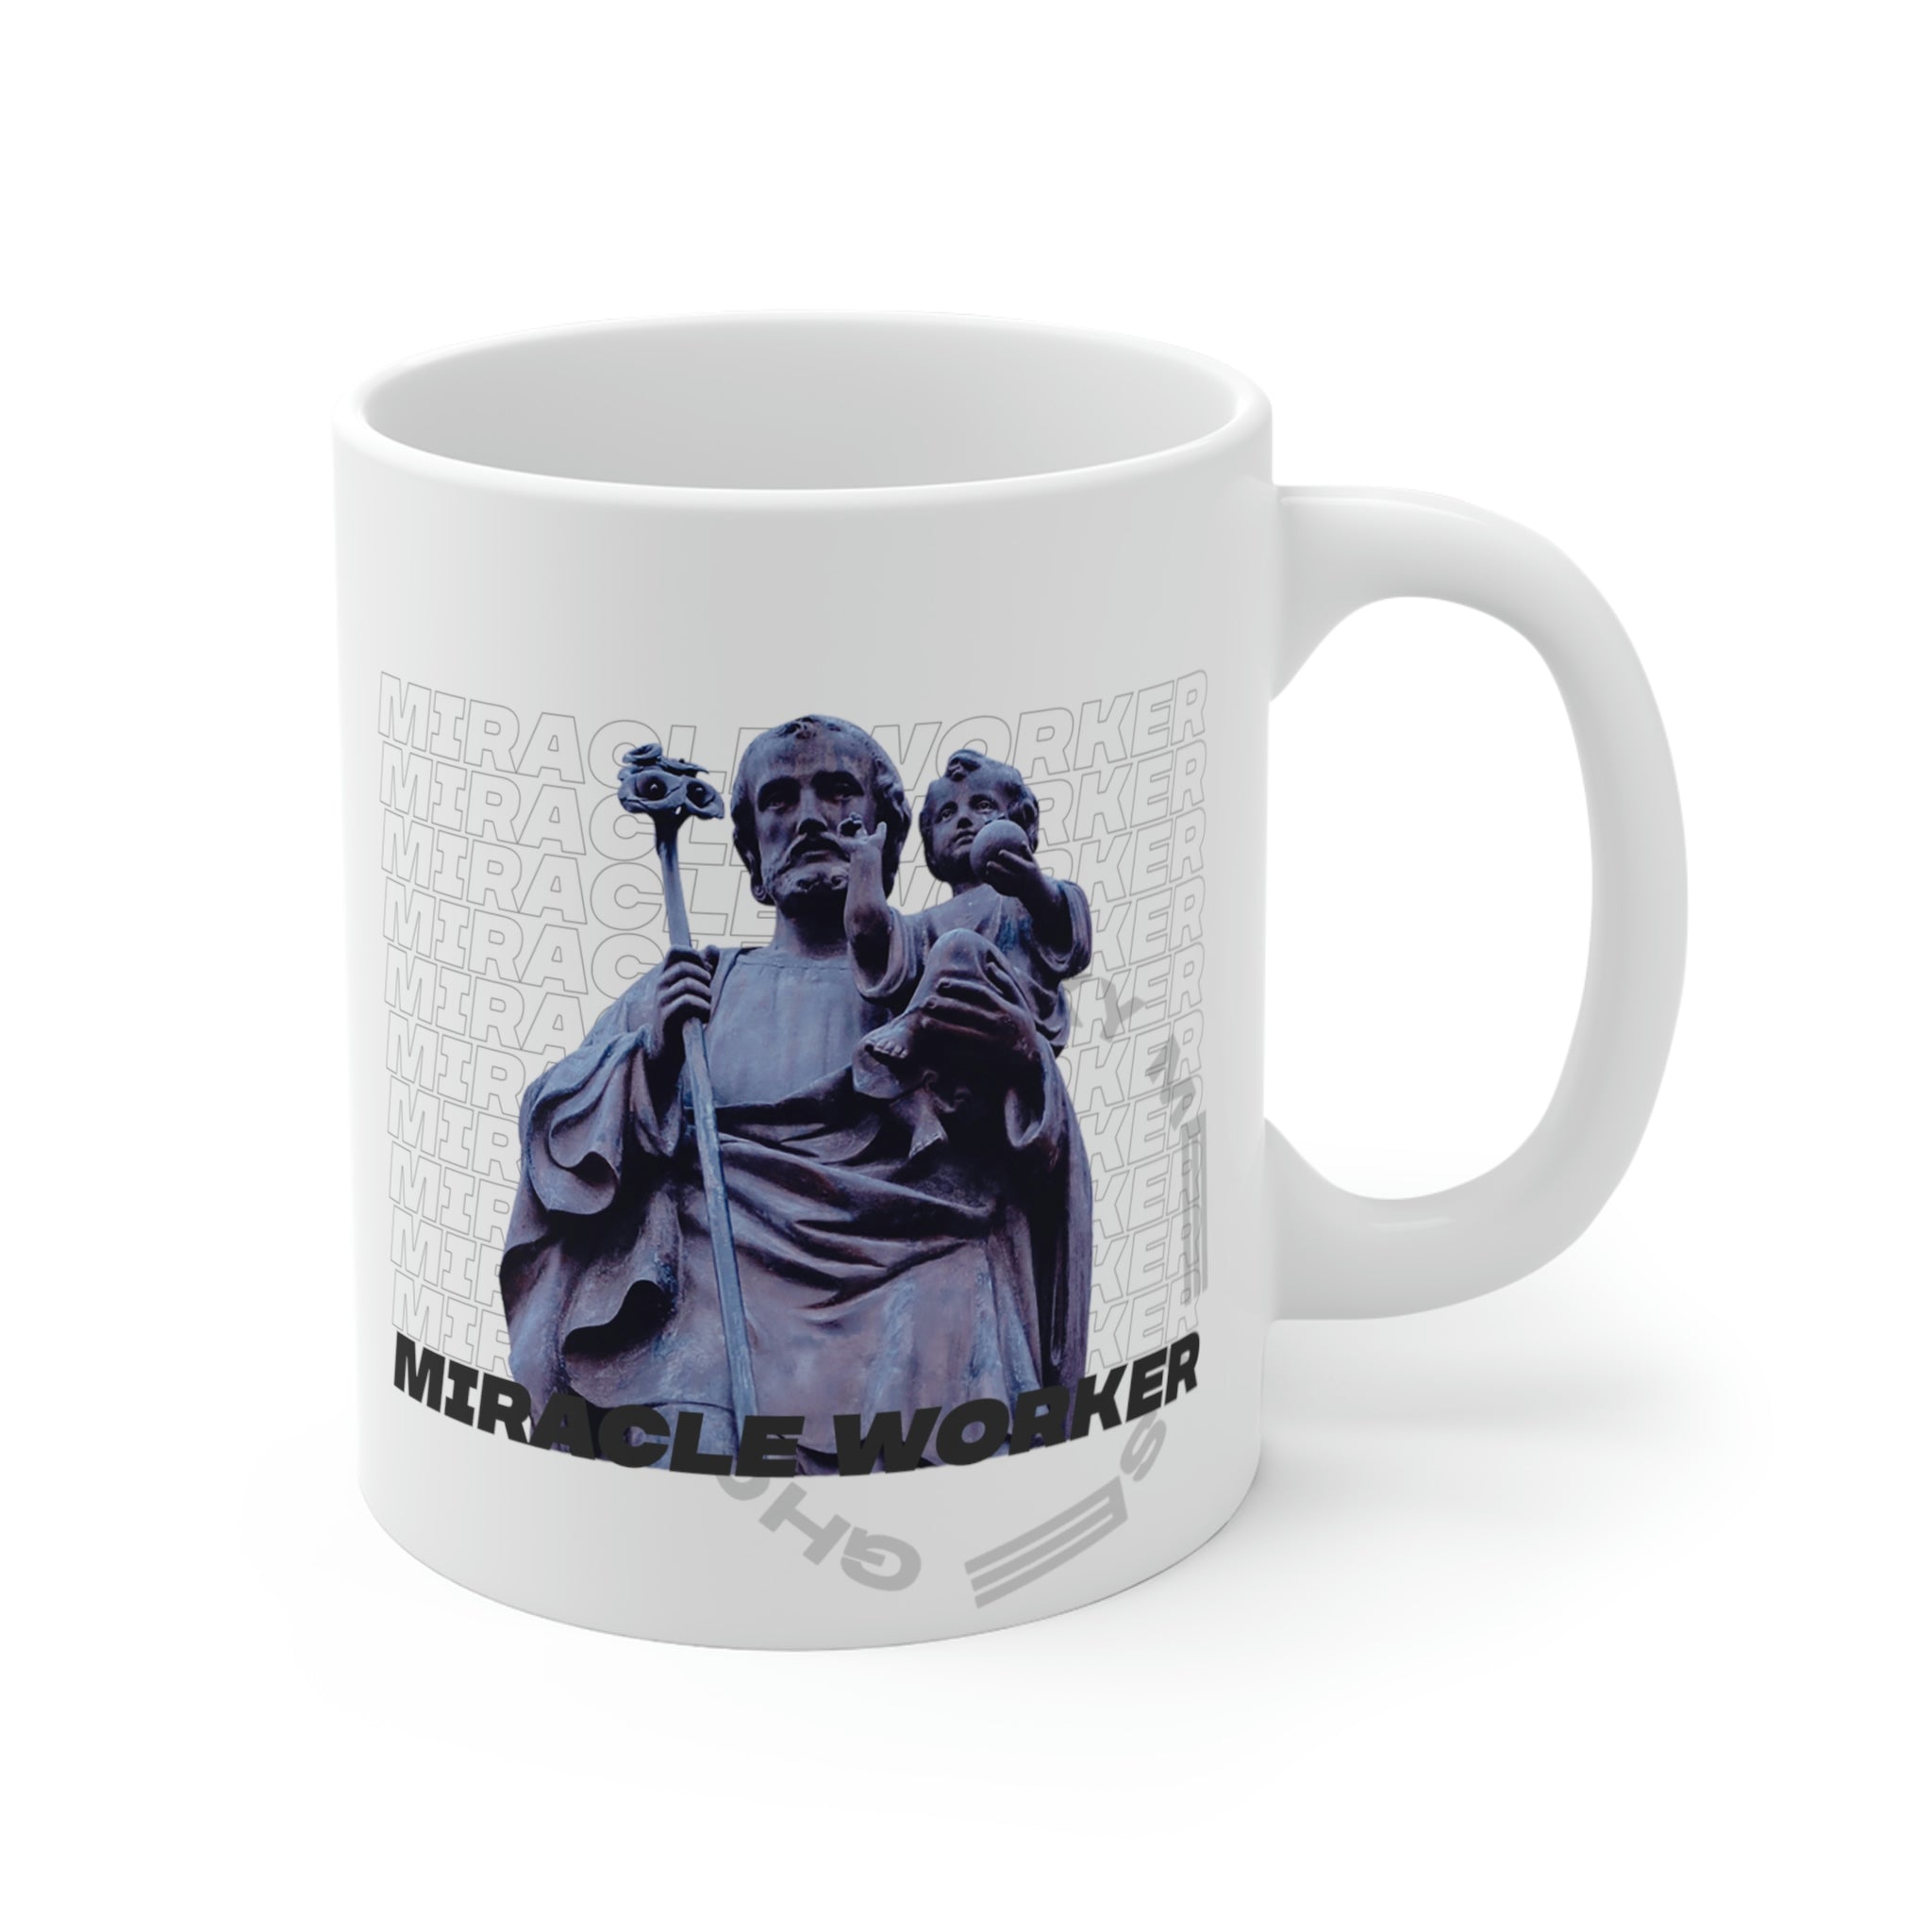 St. Joseph Miracle Worker Coffee Mug